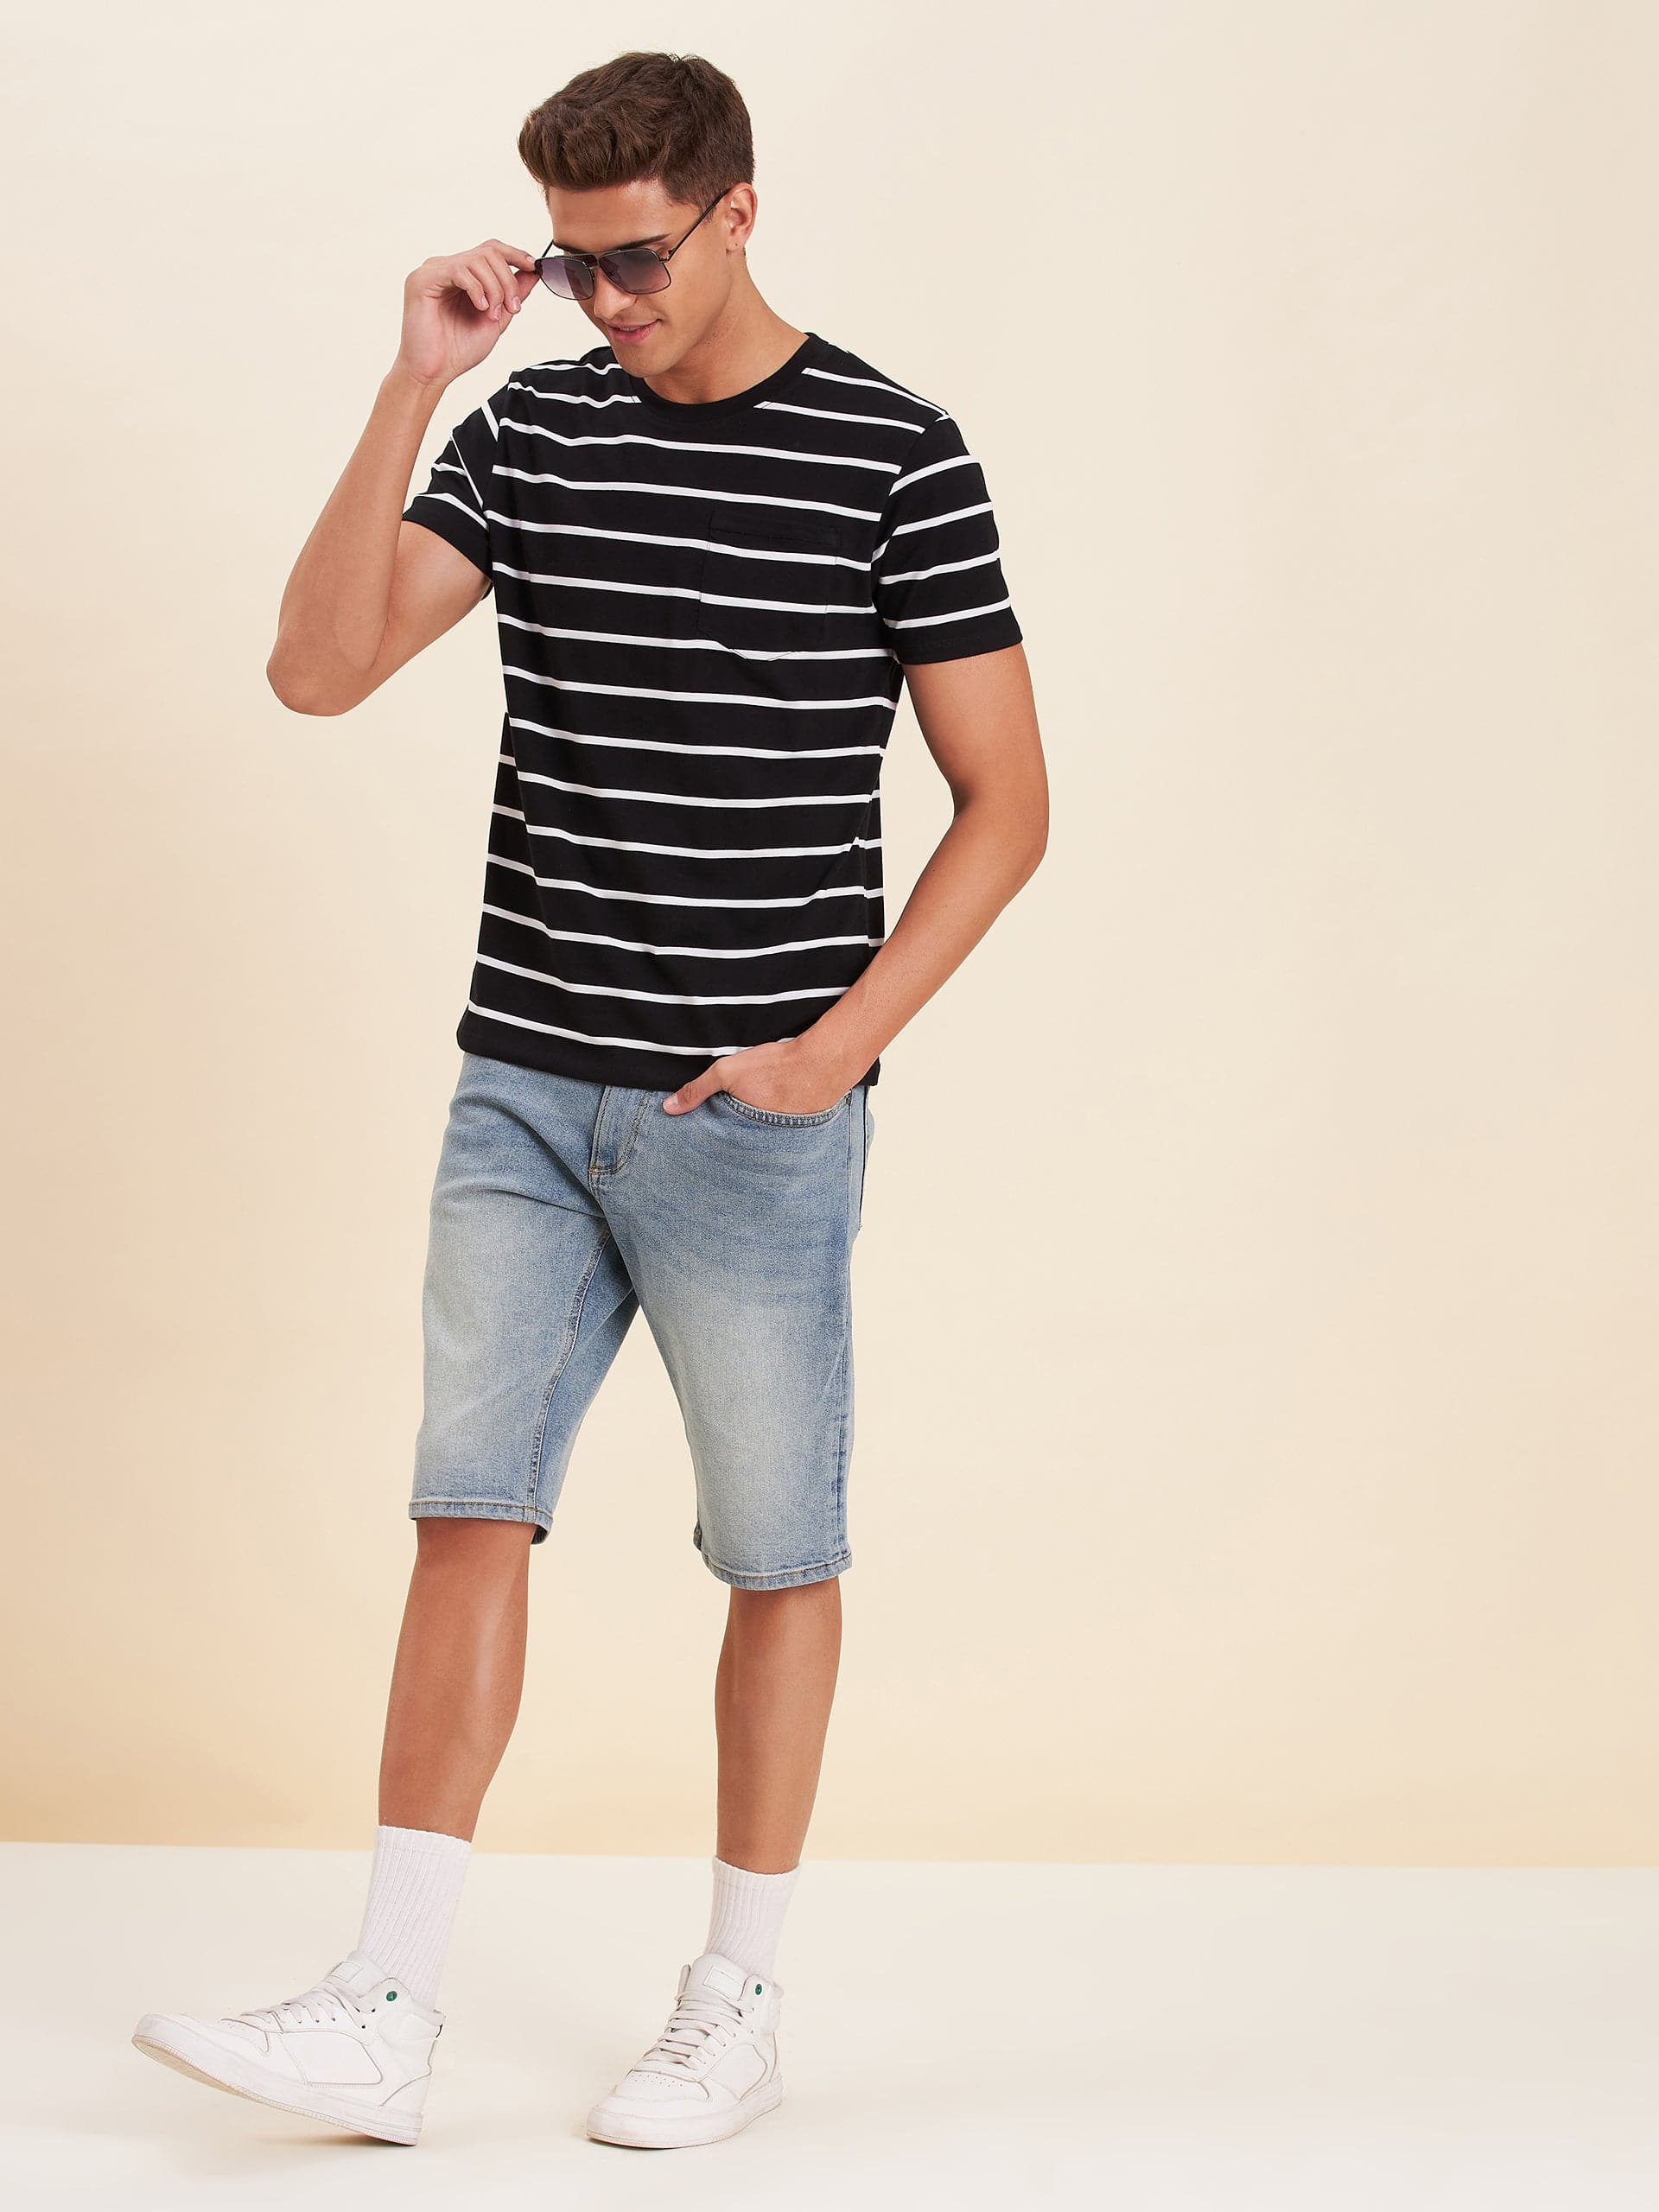 Men's Black & White Stripes Pocket Cotton T-Shirt - LYUSH-MASCLN